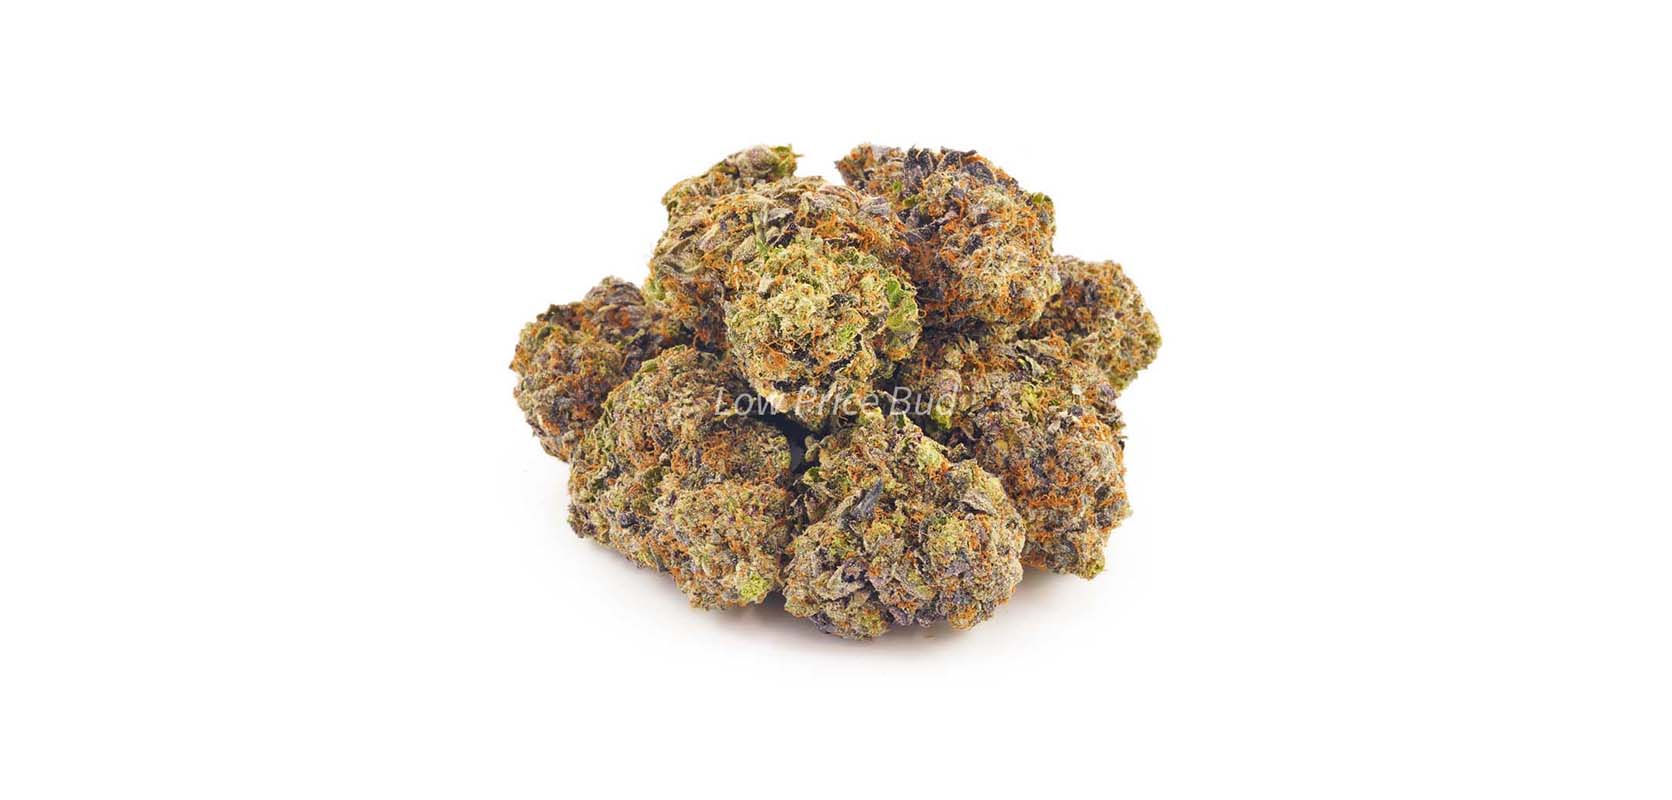 Buy Purple Gelato weed online Canada at Low Price Bud online dispensary to order weed online Canada.